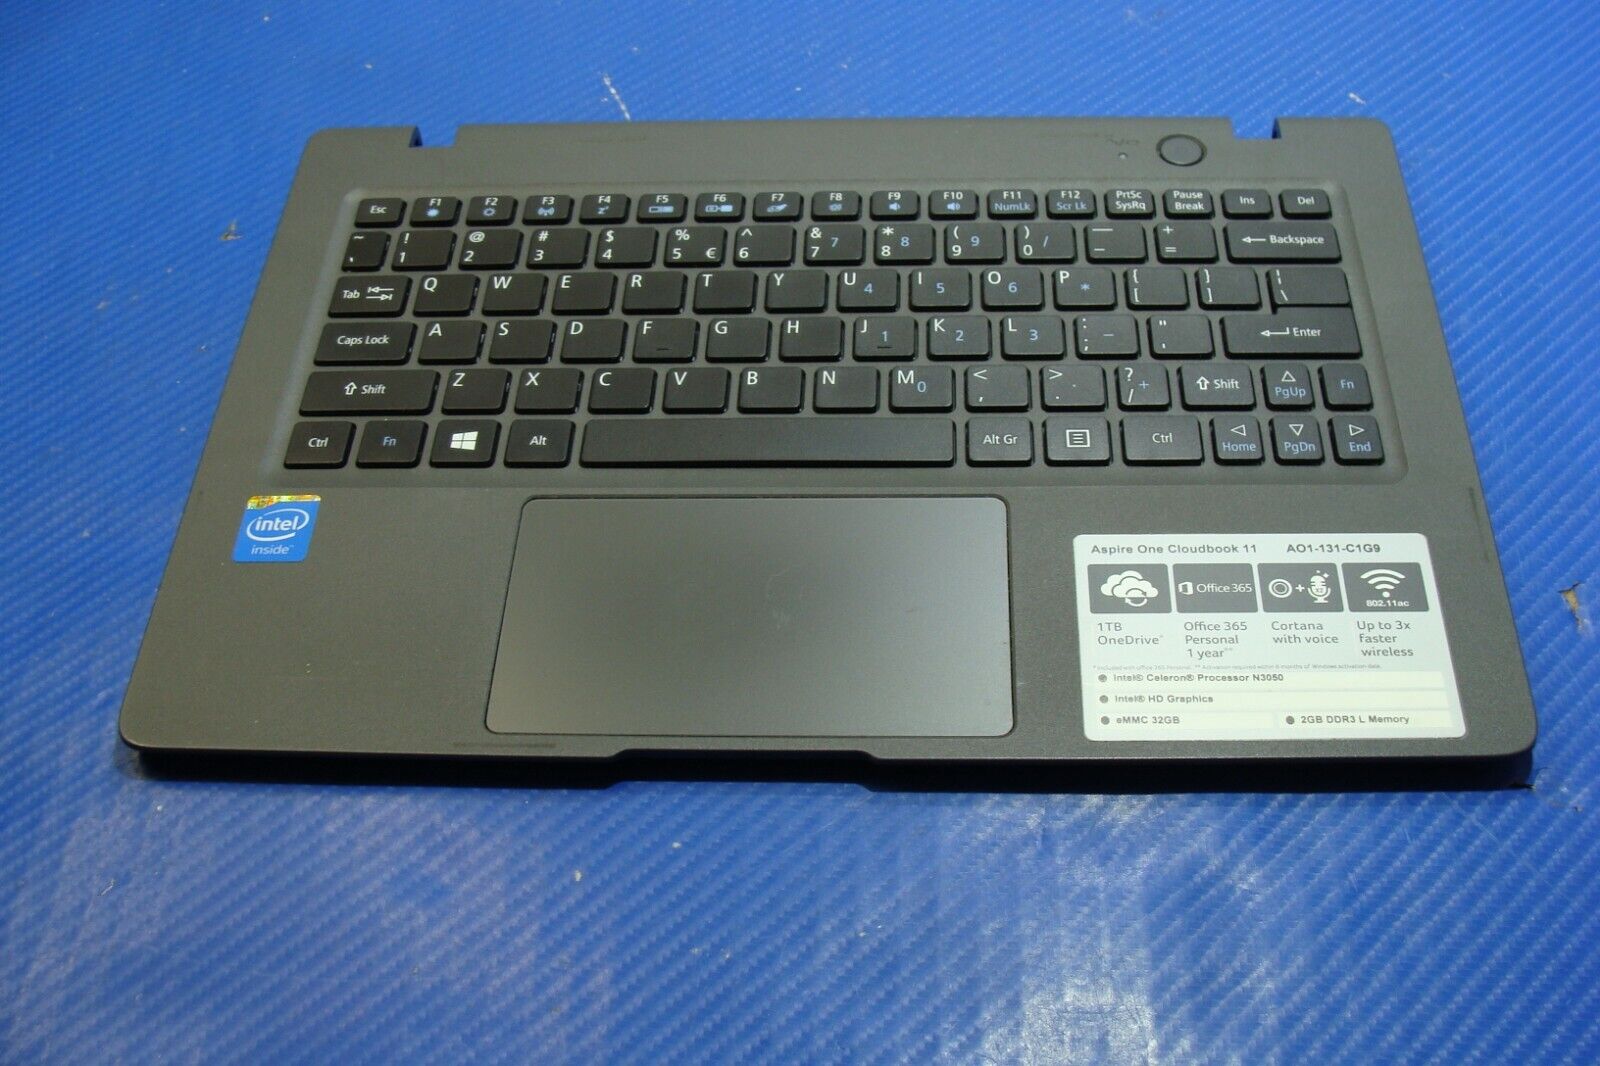 Acer AO1-131-C1G9 11.6